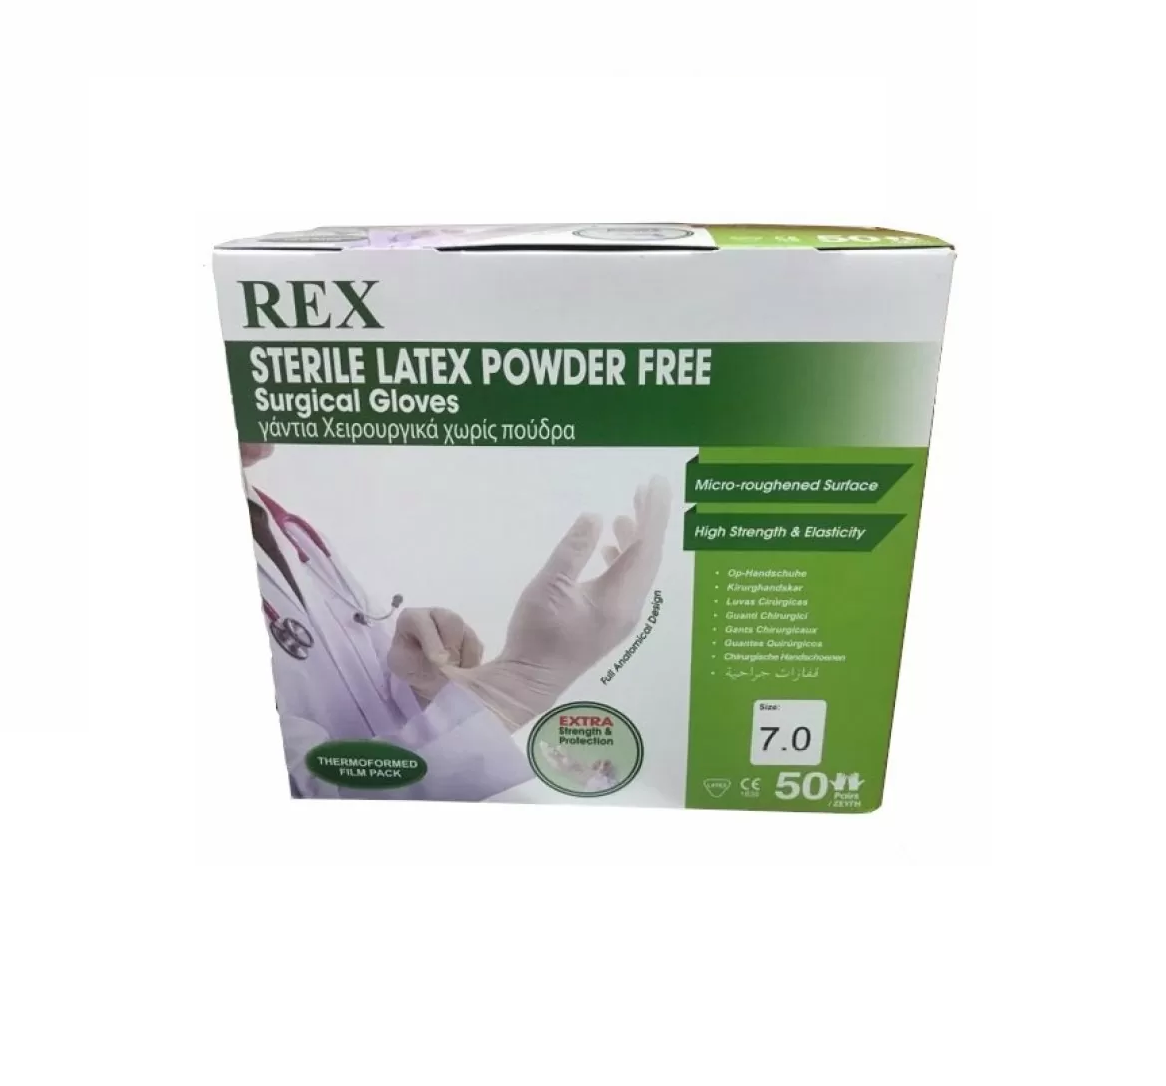 REX Γάντια αποστειρωμένα χωρίς πούδρα RXSTNP80 8.0 - 50 ζεύγη